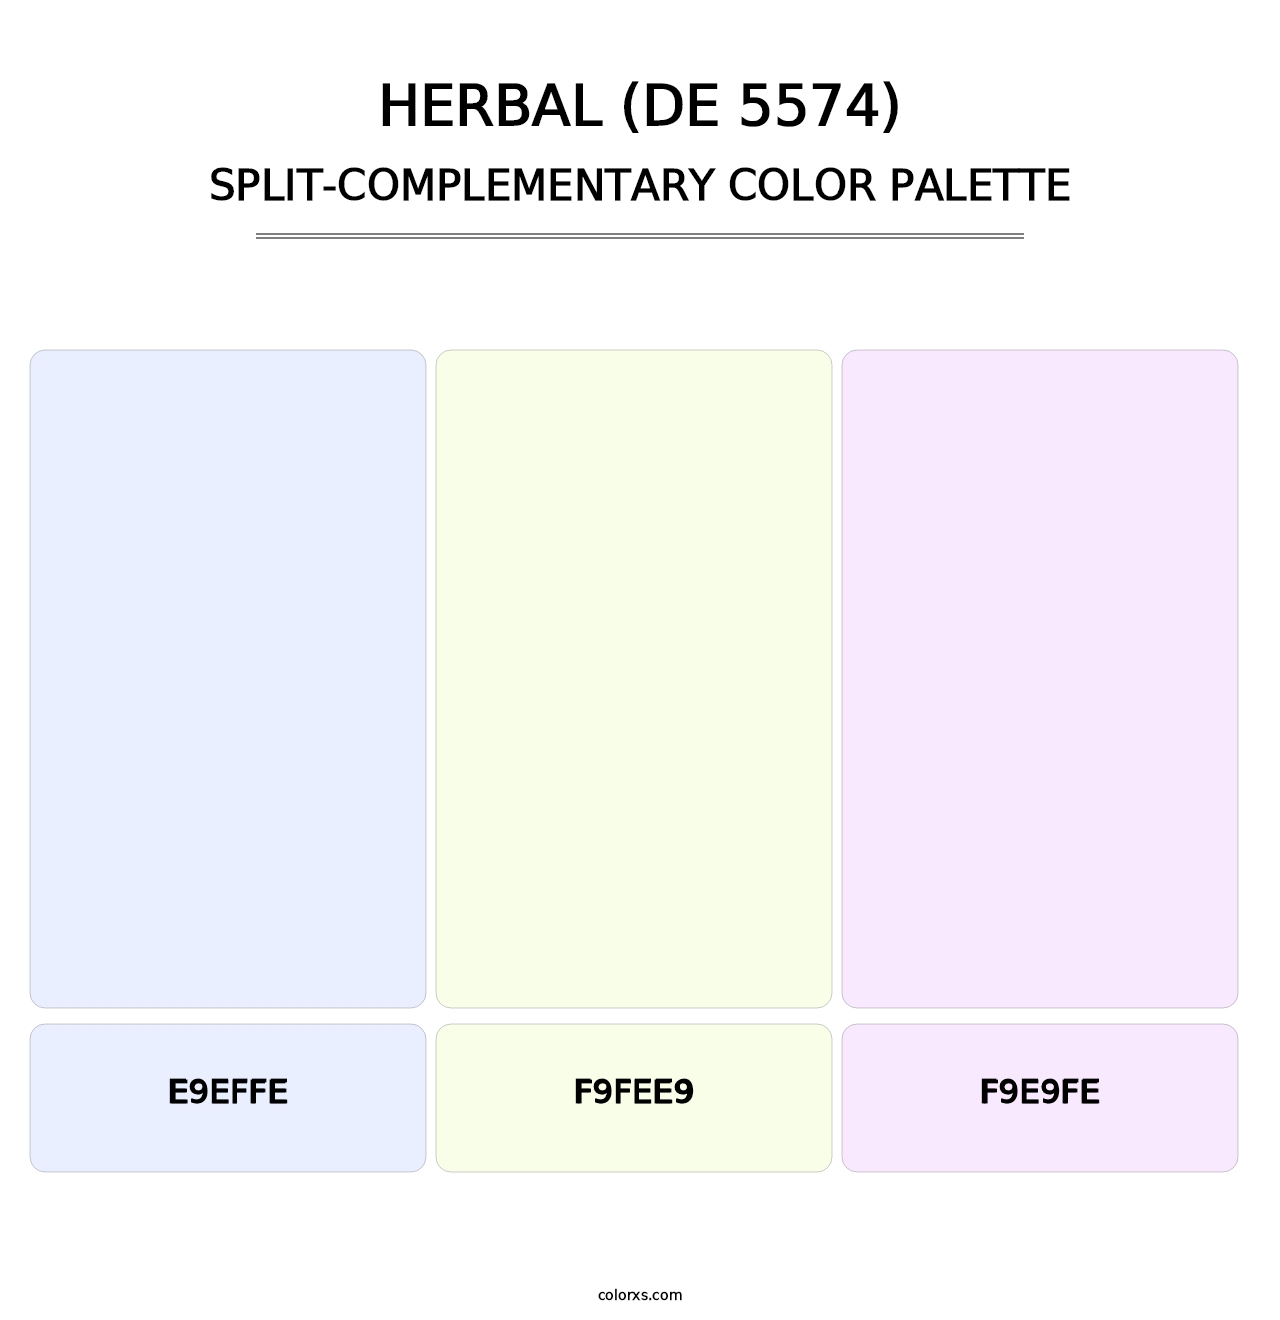 Herbal (DE 5574) - Split-Complementary Color Palette